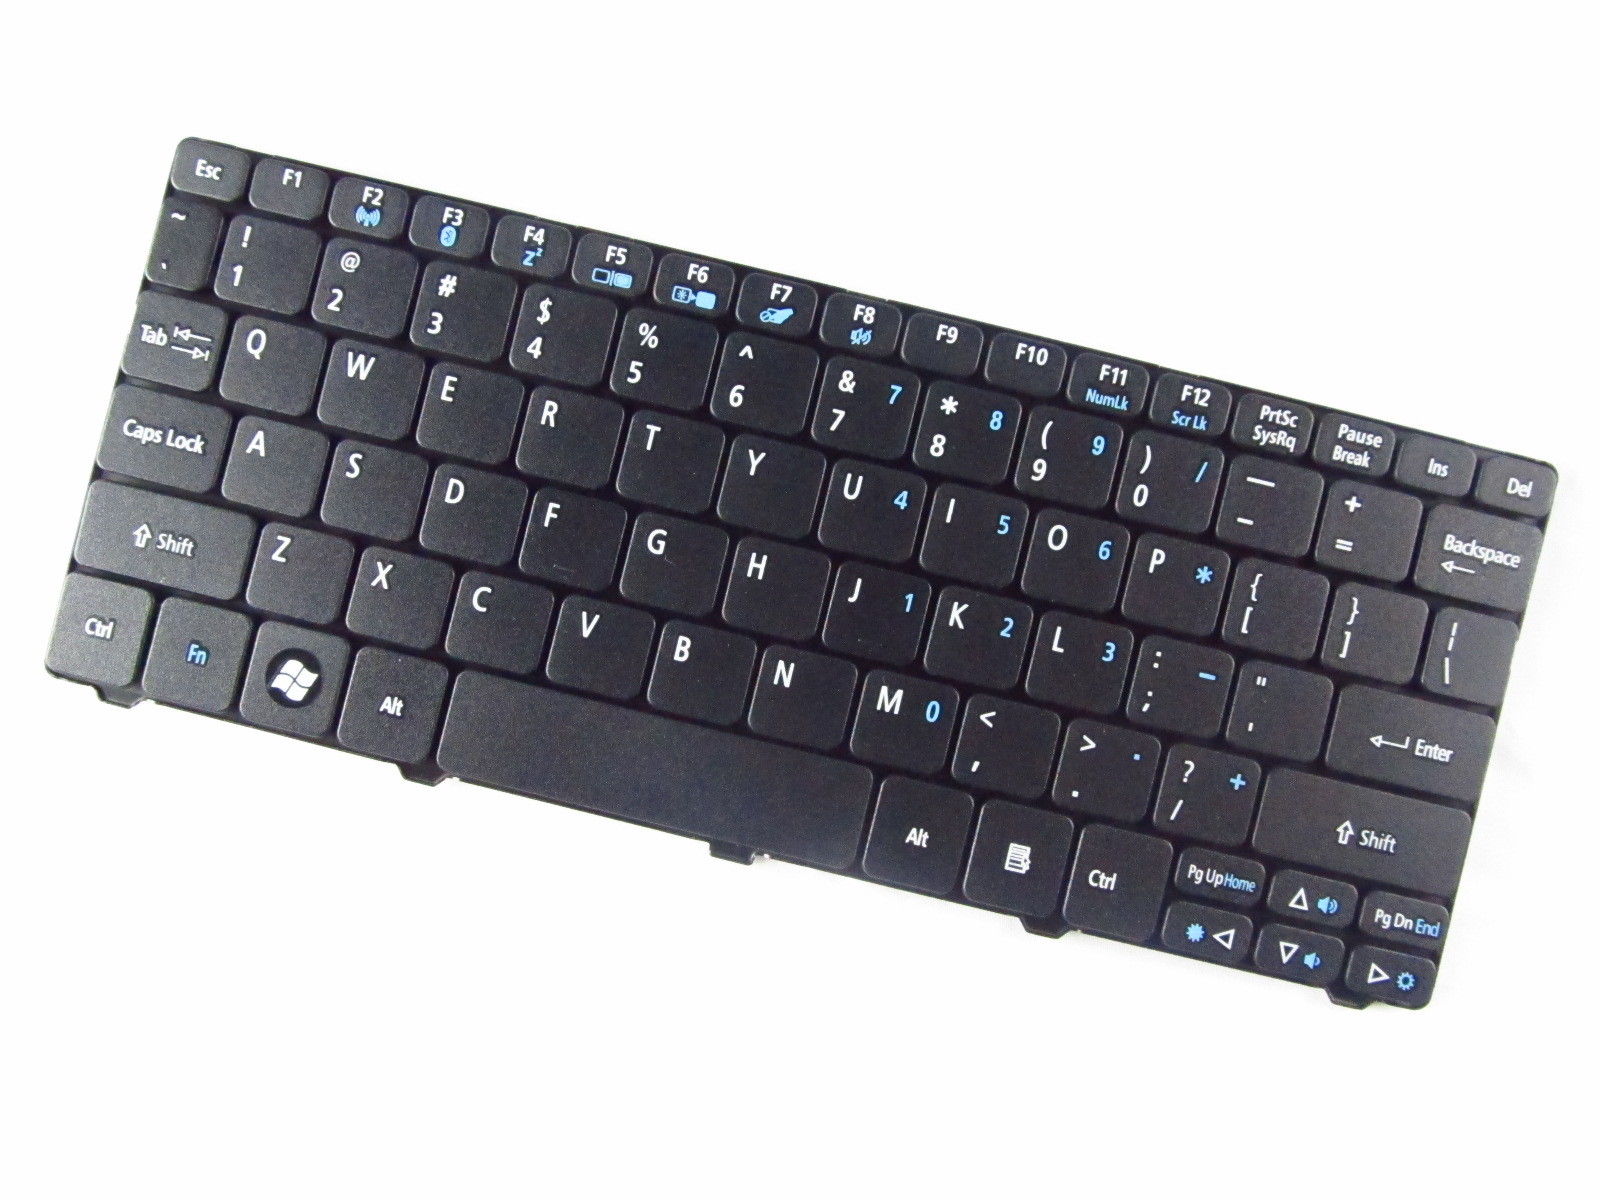 msi Laptop Keyboard Repair/replacement in chennai